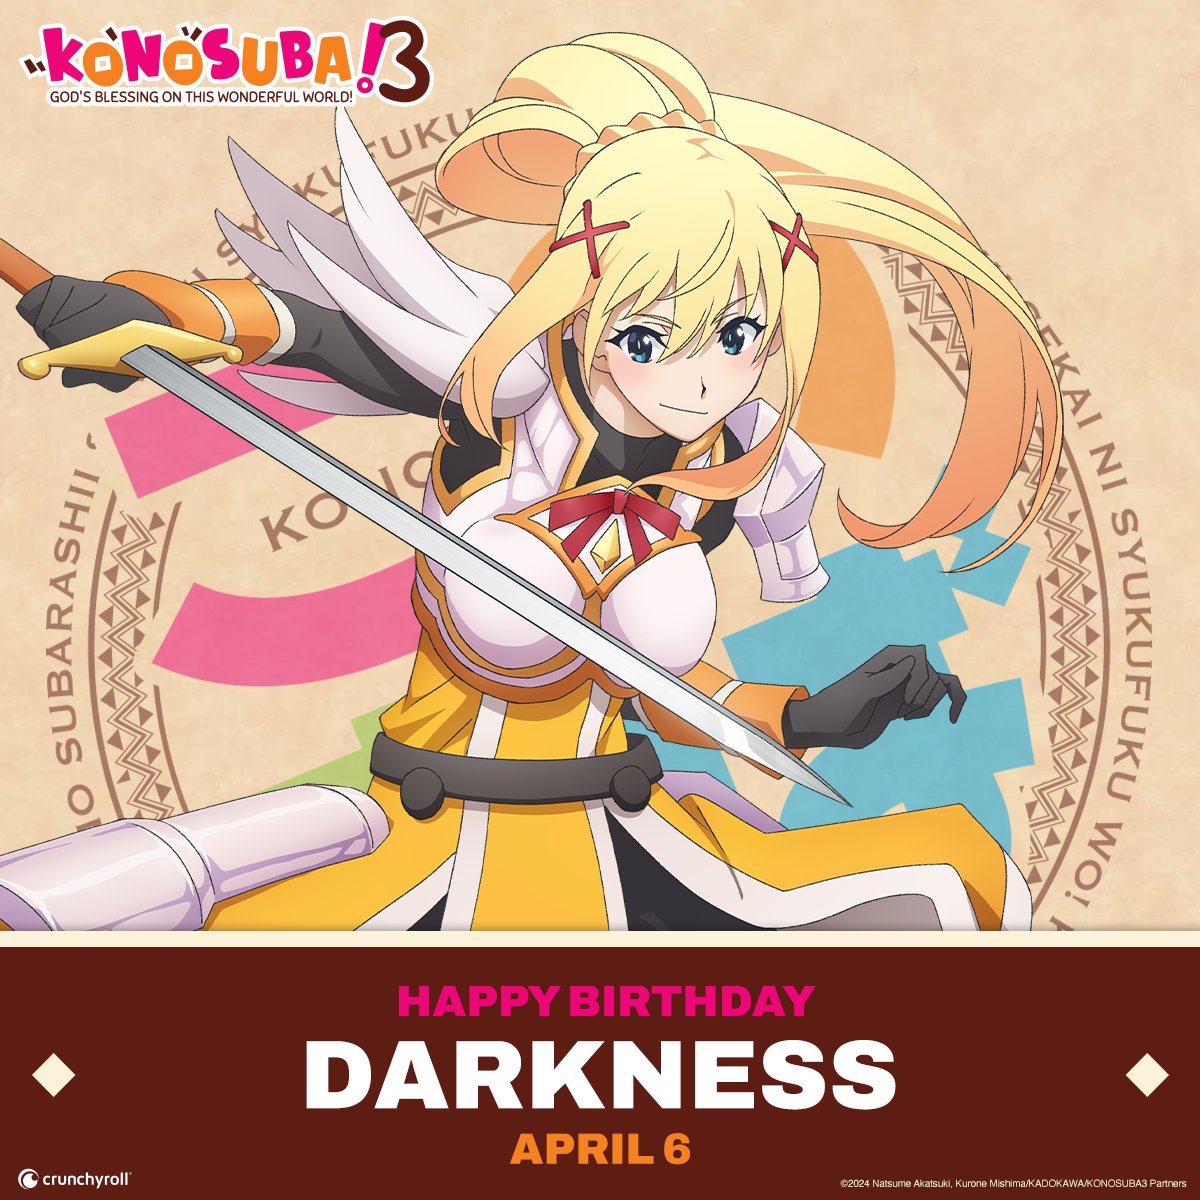 Happy birthday, Darkness 🎂⚔️